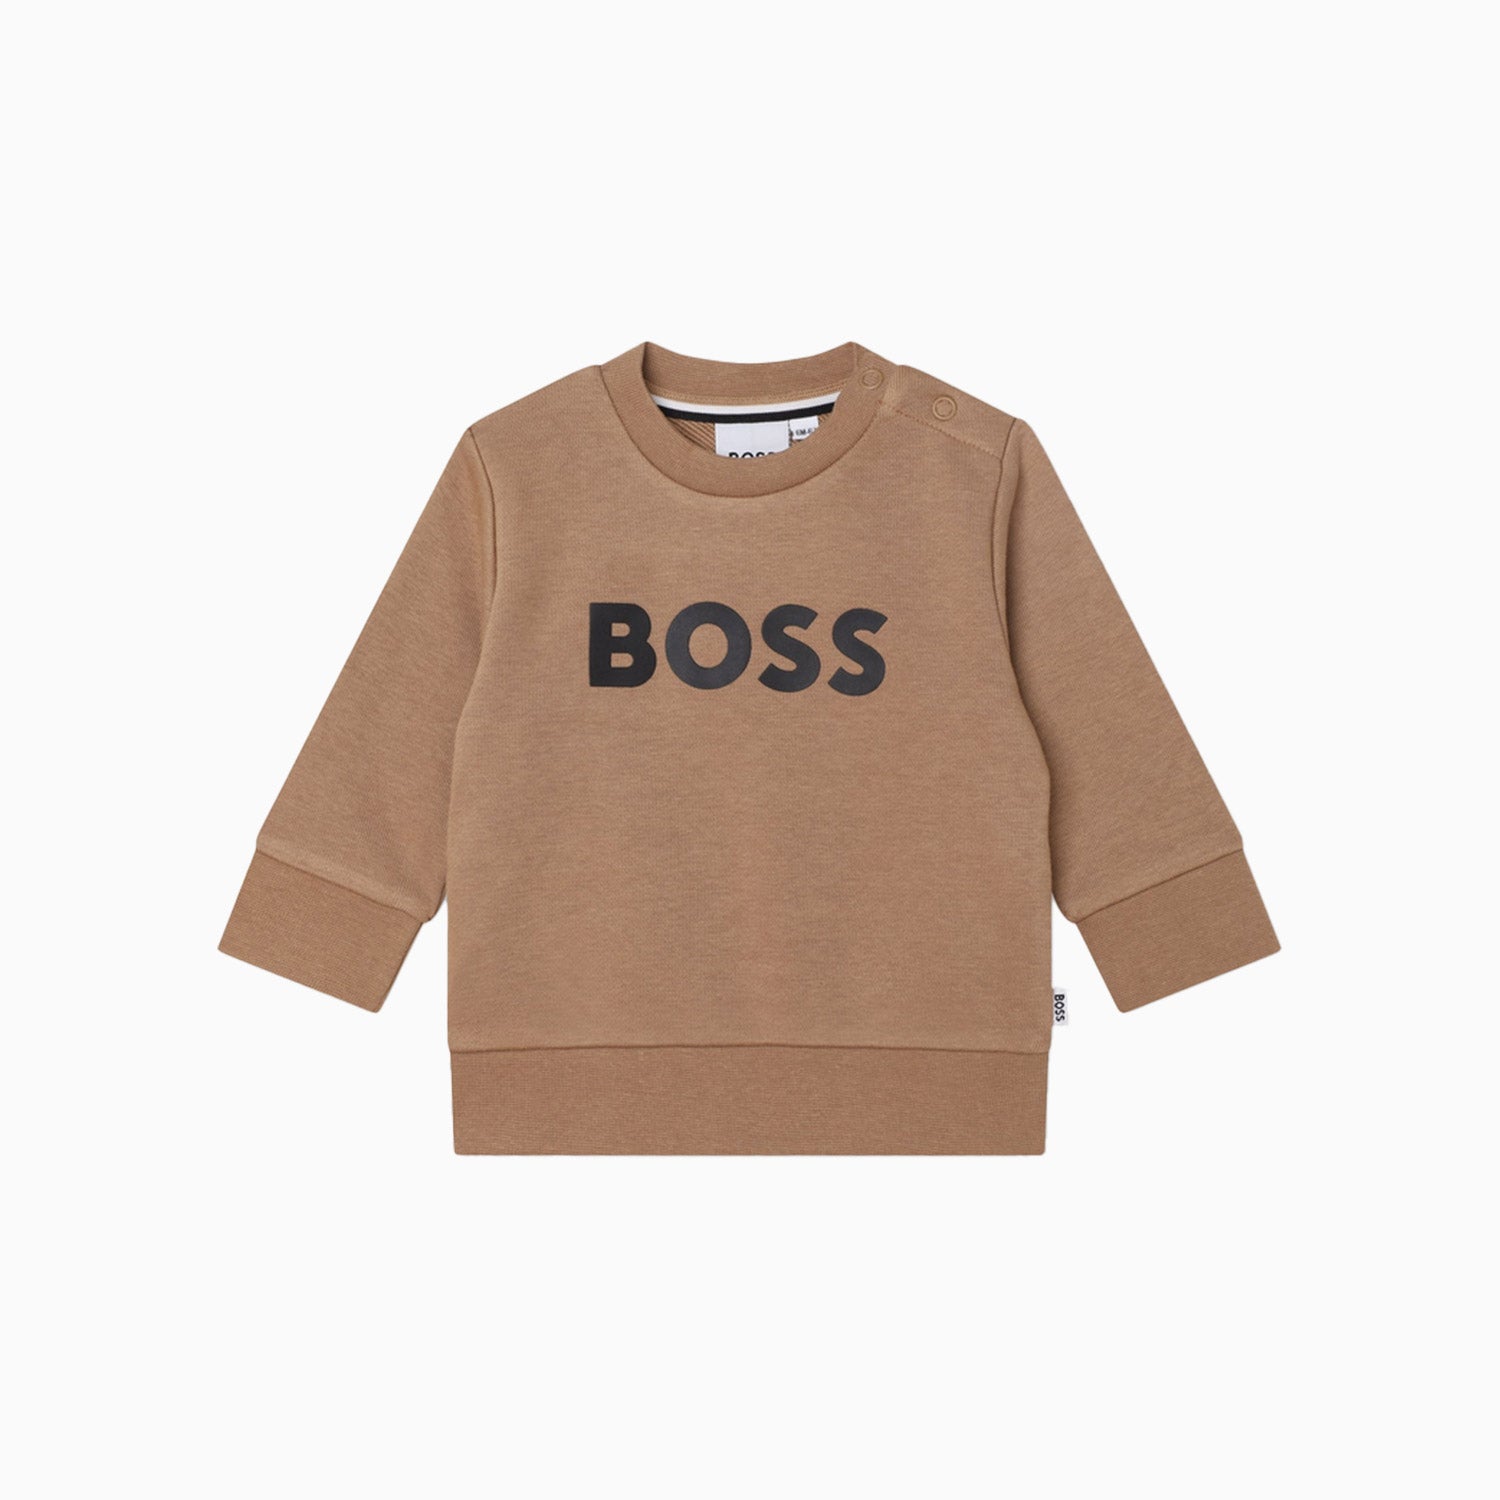 hugo-boss-kids-mini-me-logo-crew-neck-sweatshirt-j05a42-269